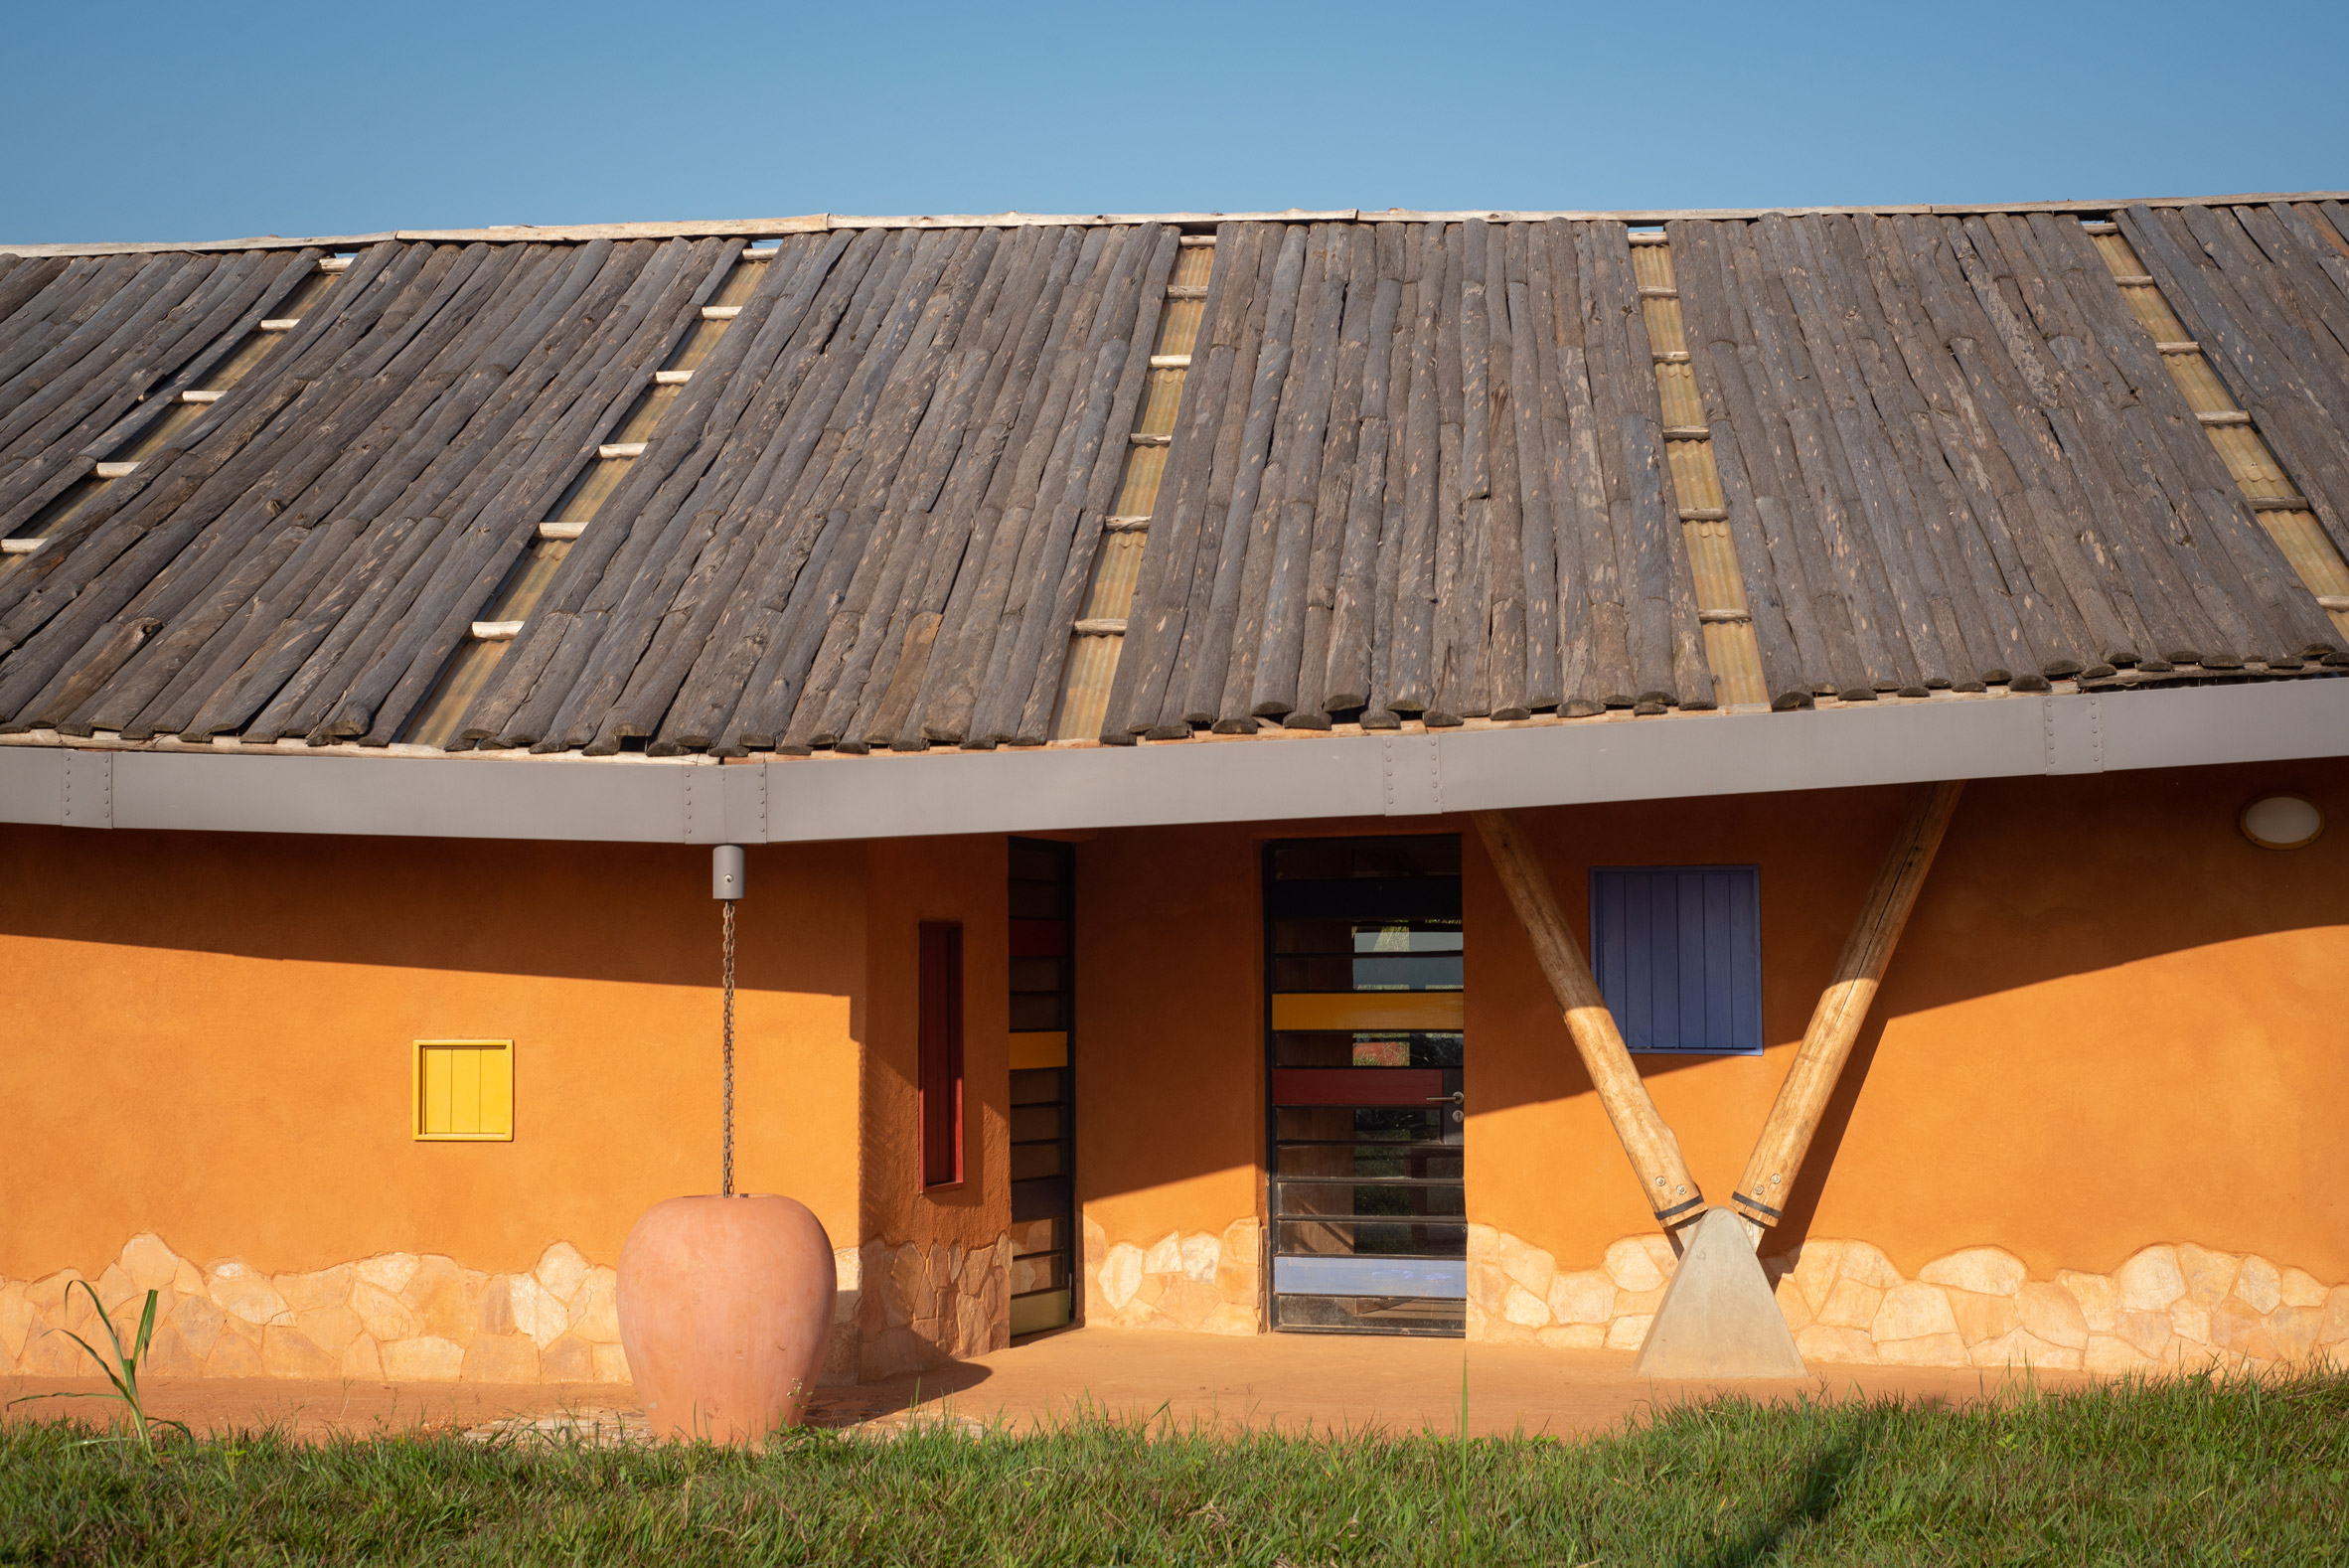 Exterior of primary school in Uganda